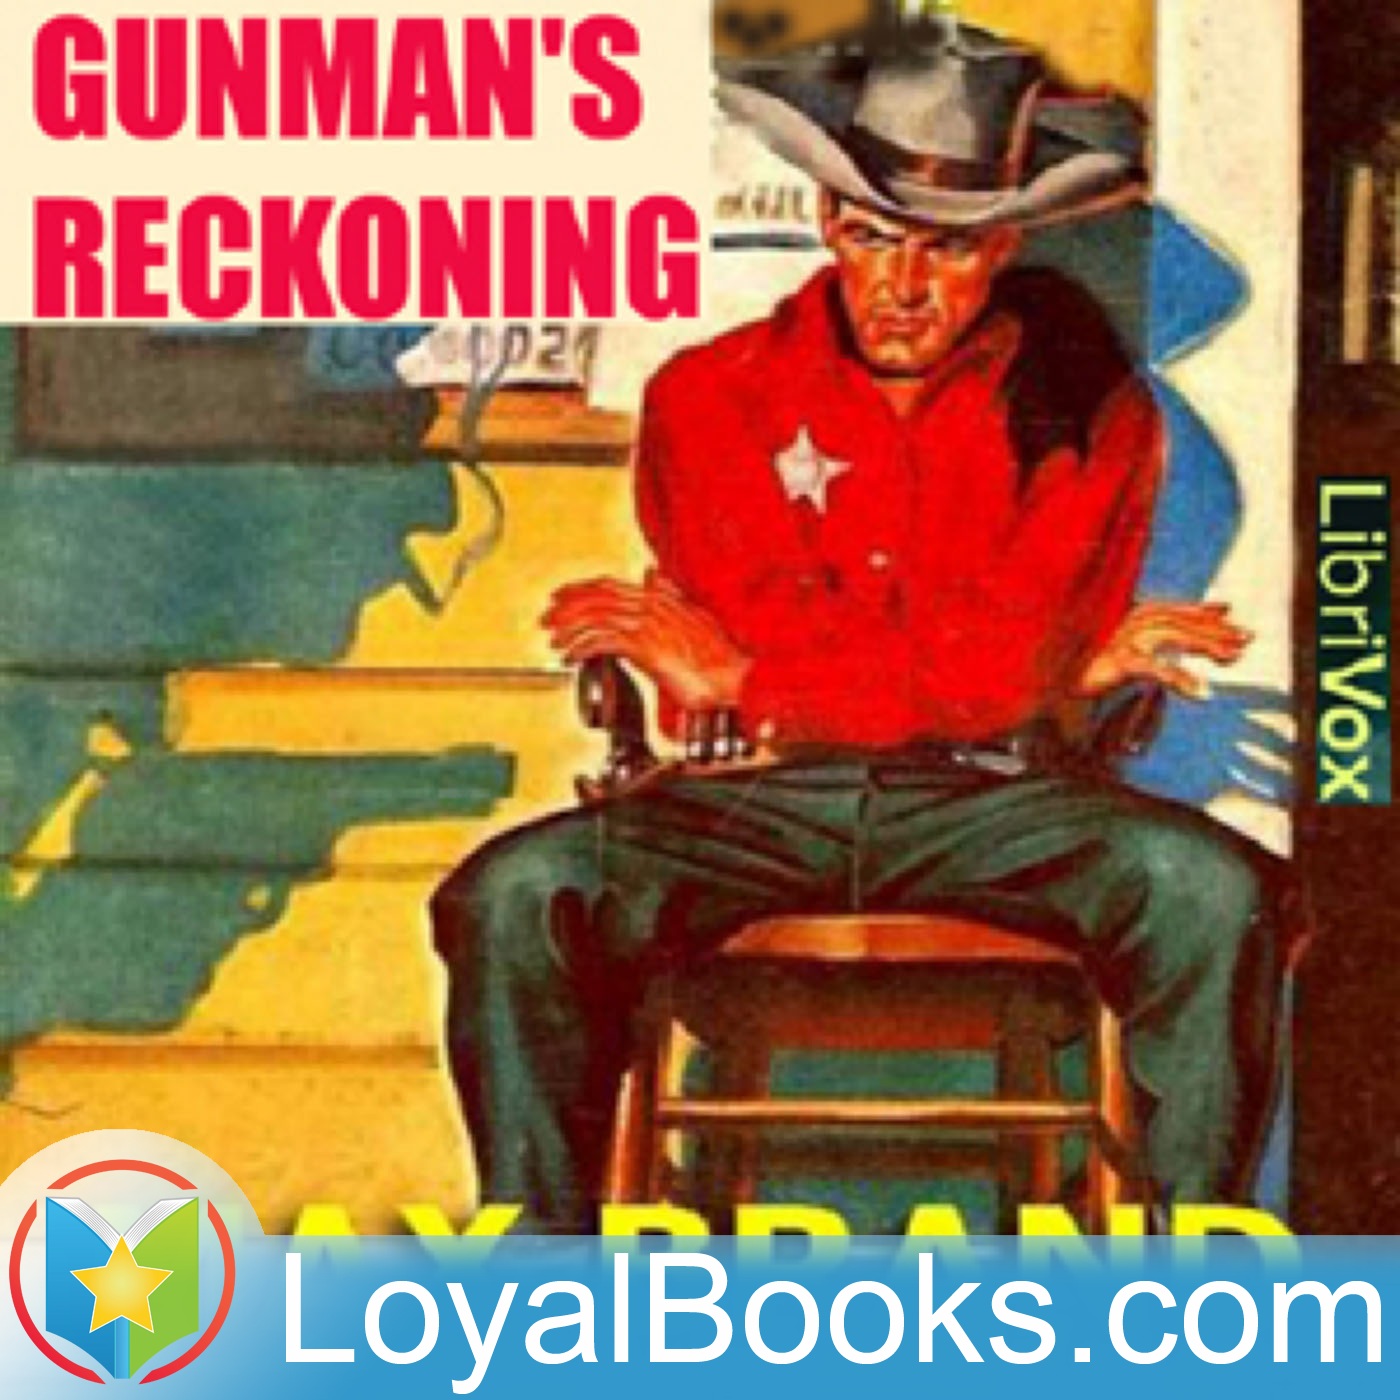 Gunman's Reckoning by Max Brand